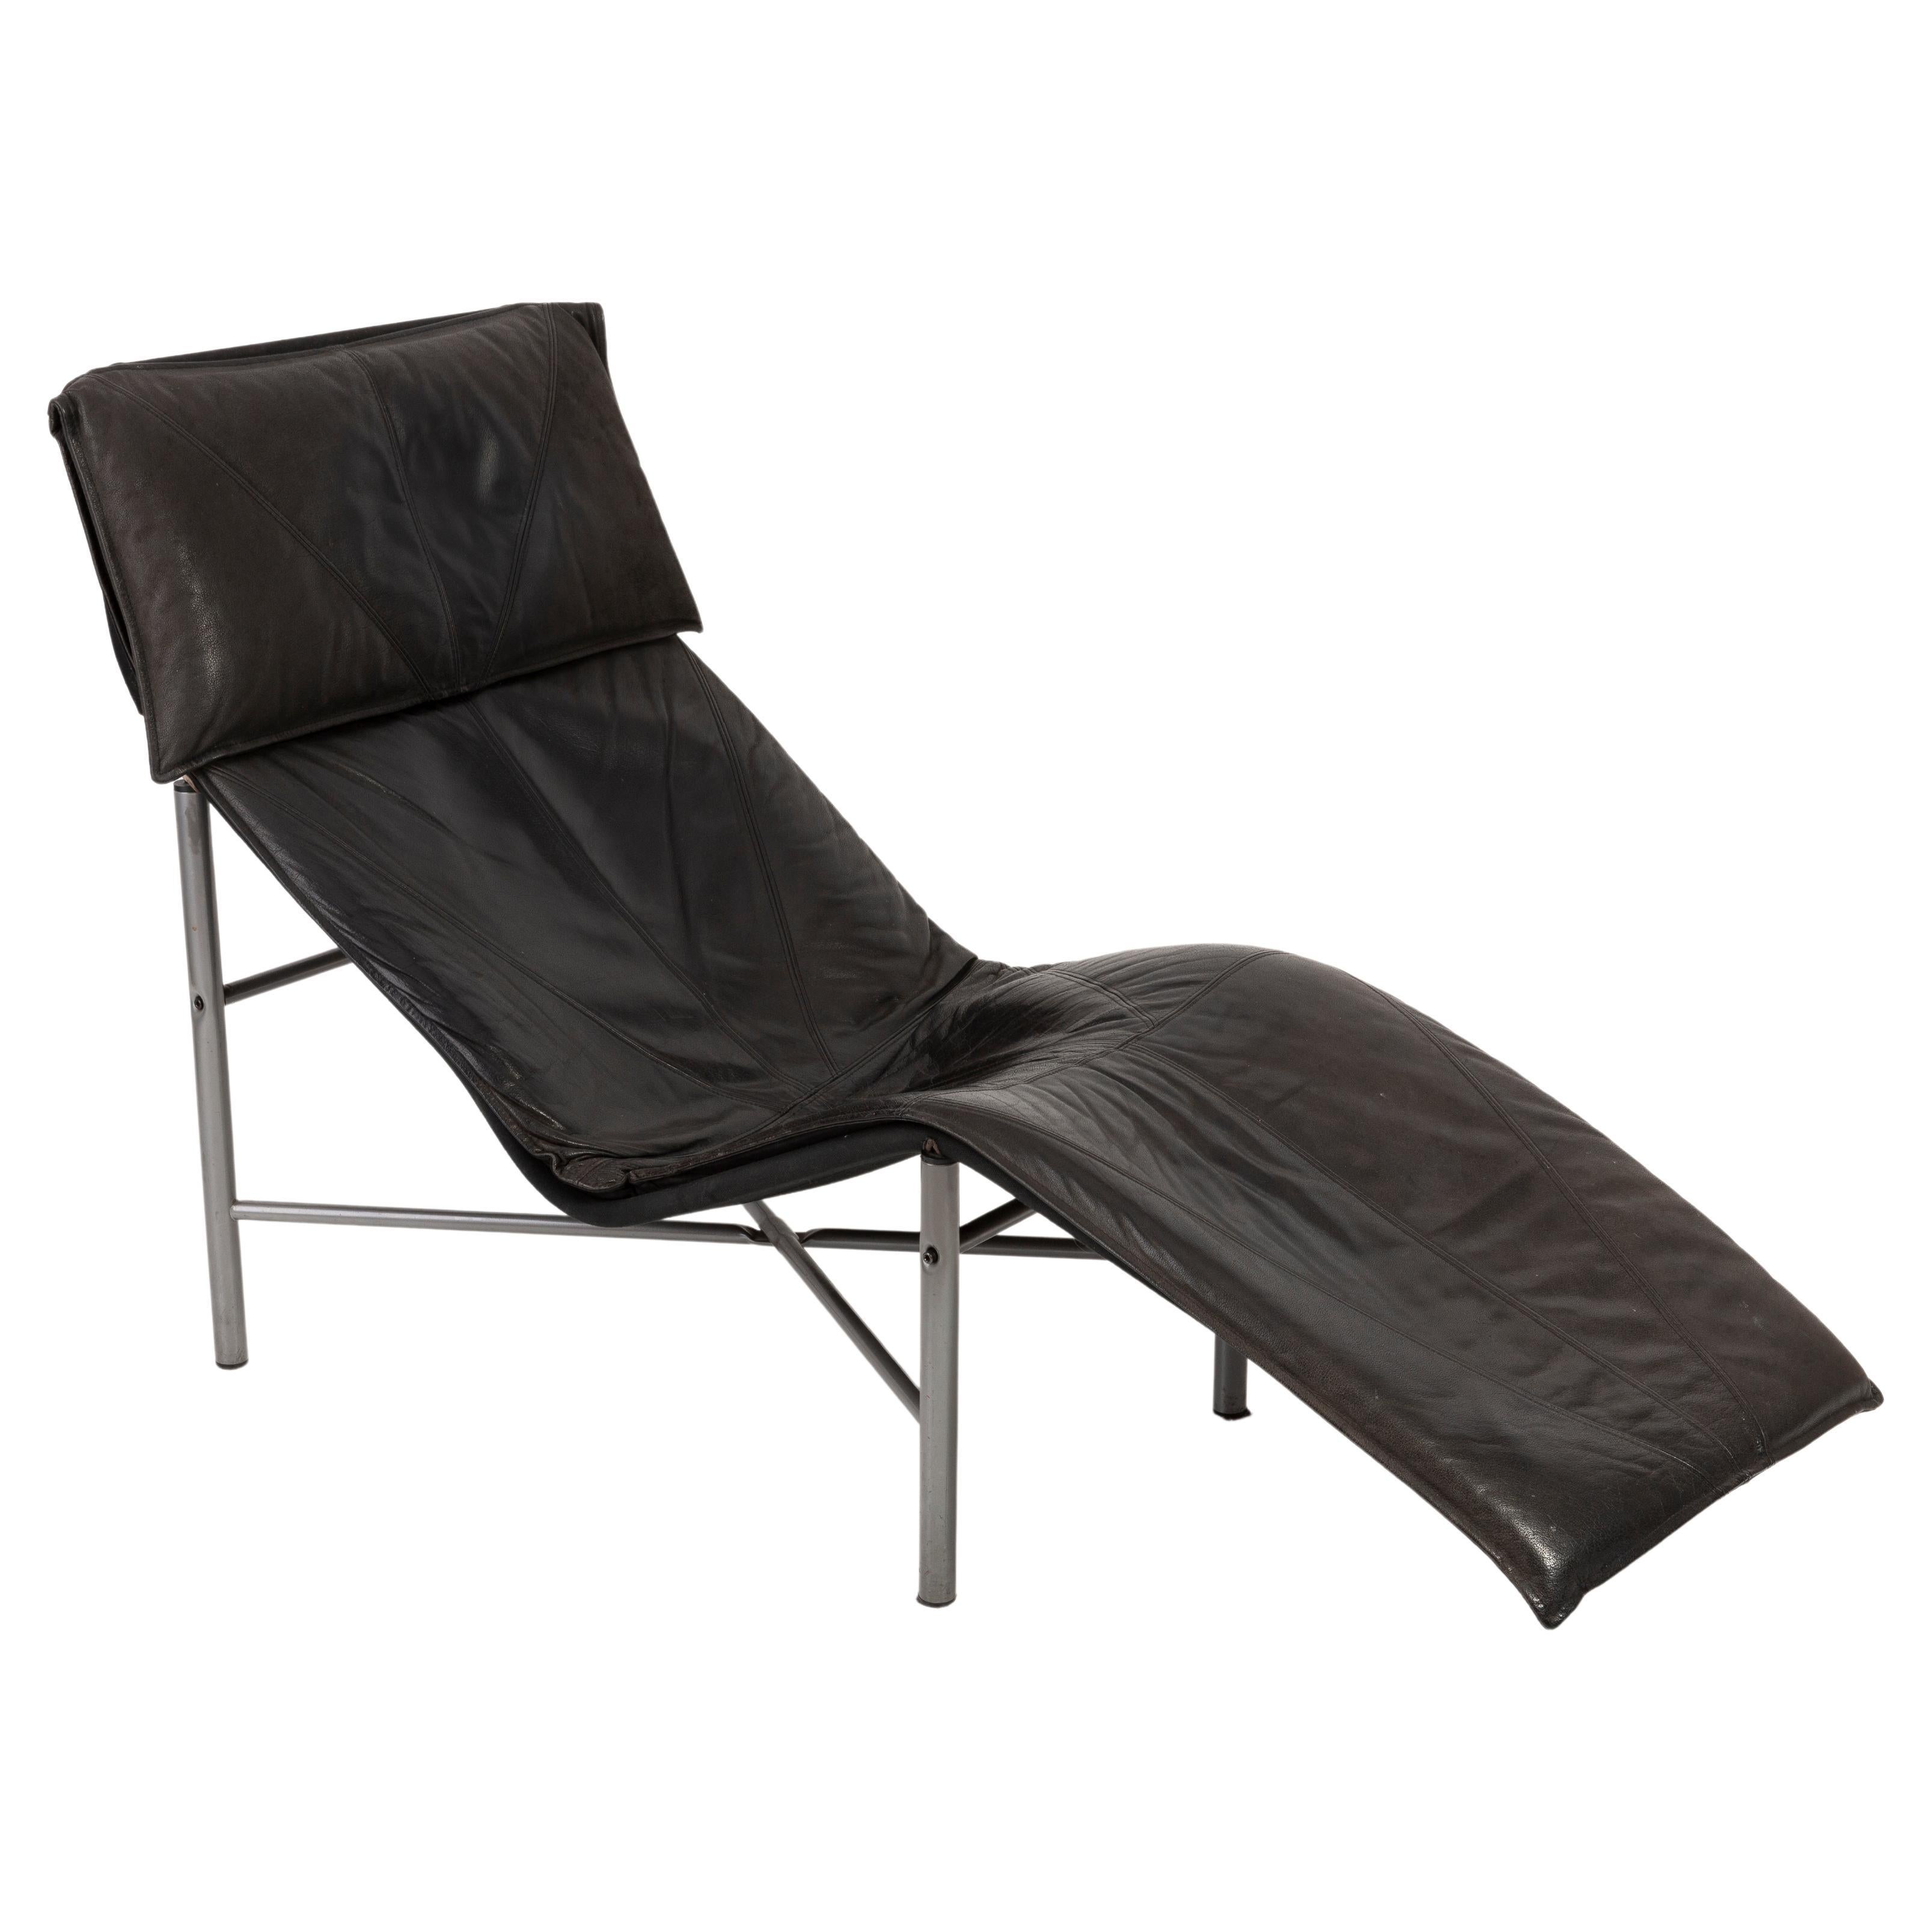 Midcentury Danish Modern Black Leather Chaise Lounge Chair by Tord Björklund